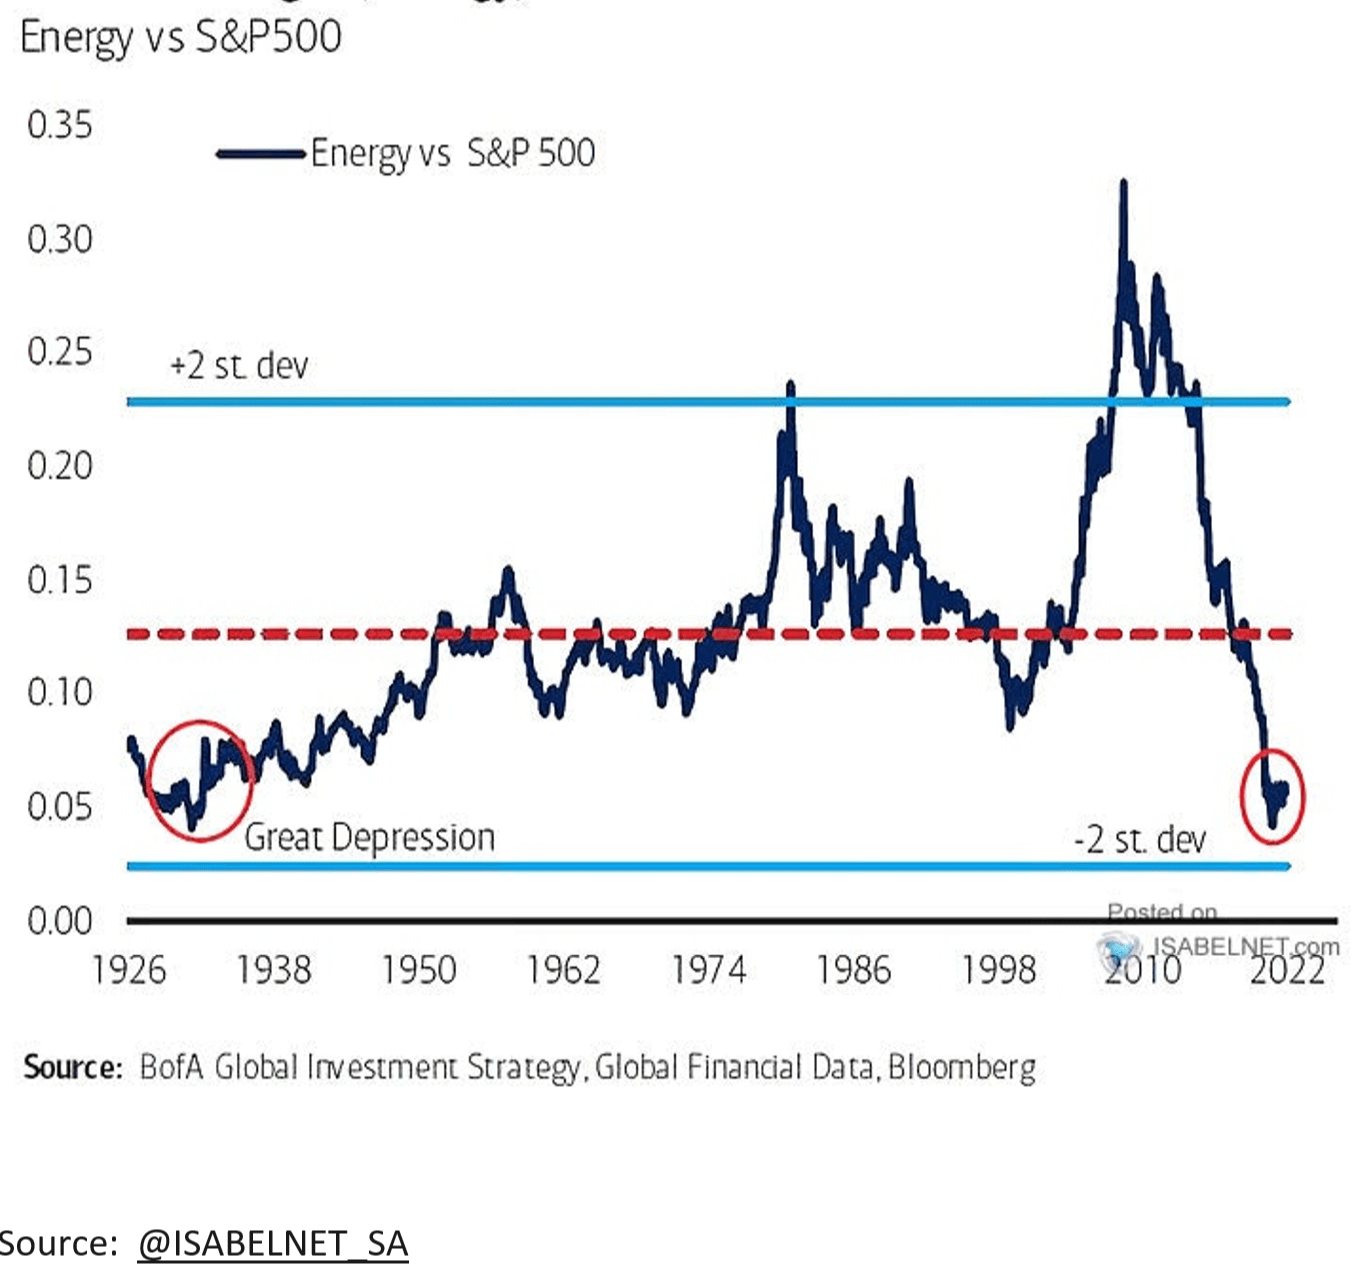 energy sector stock performance vs S&P 500 2022